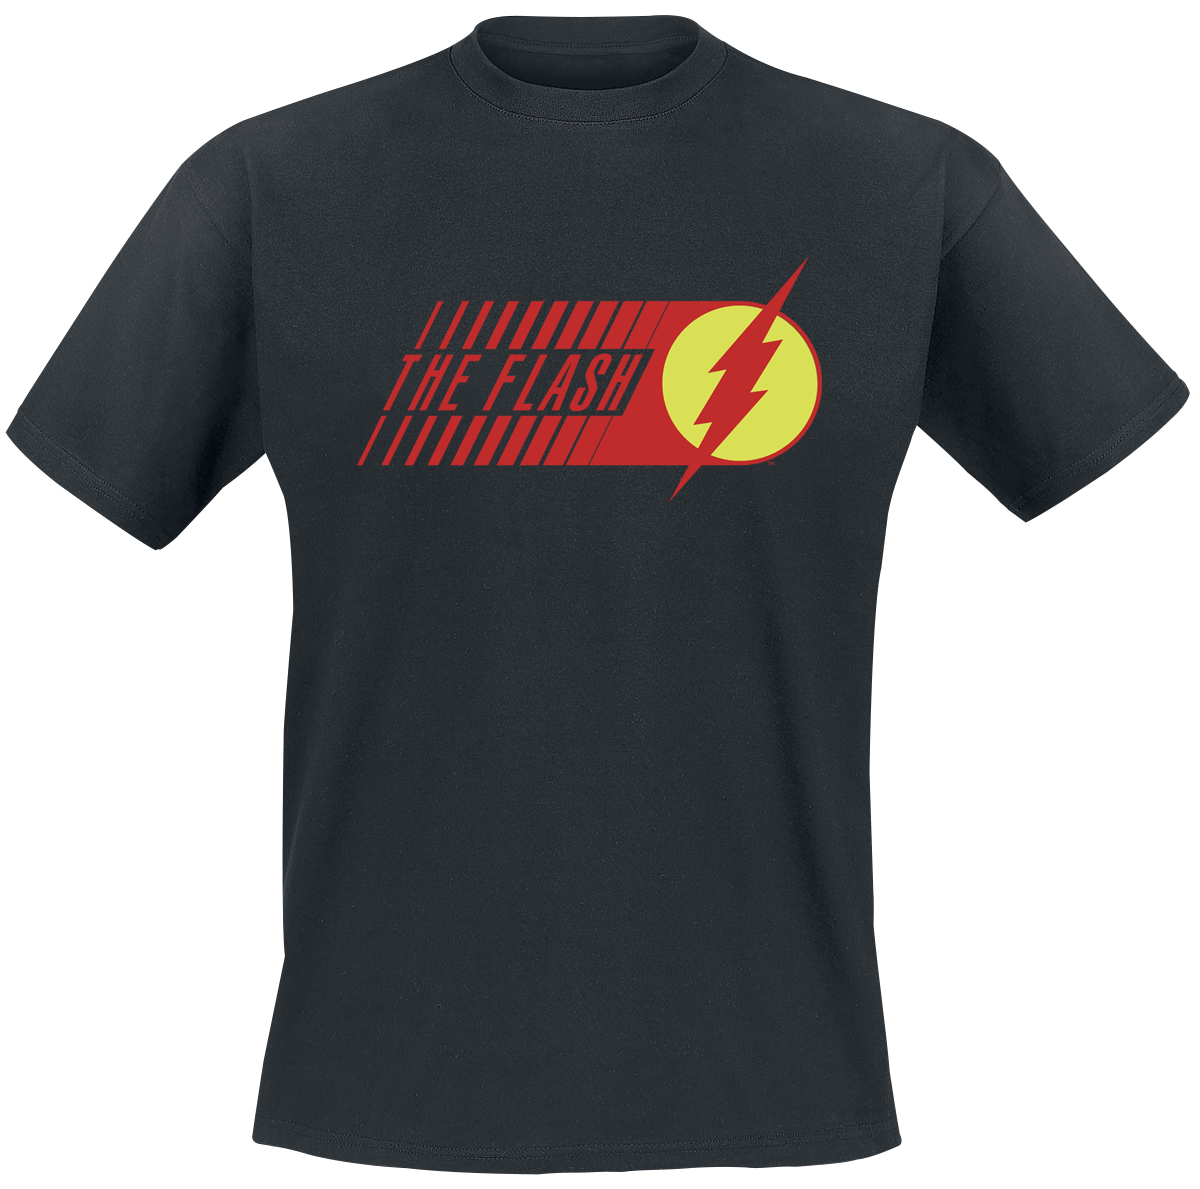 The Flash - Flash - Starlabs - T-Shirt - schwarz - EMP Exklusiv!